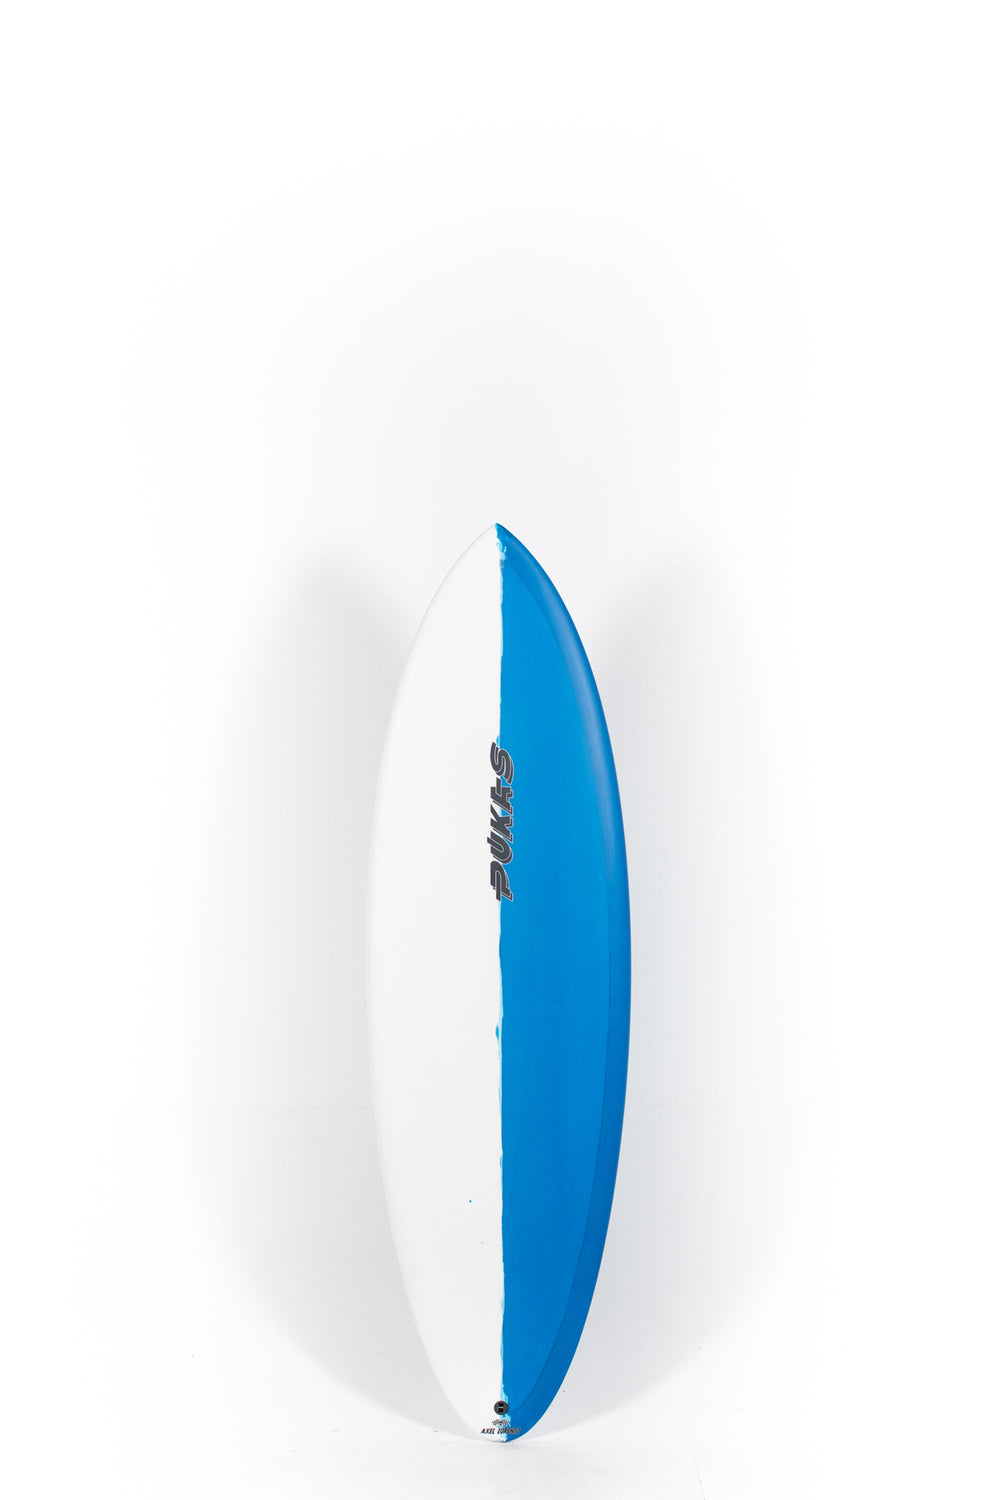 Pukas Surf Shop - Pukas Surfboard - ORIGINAL 69 by Axel Lorentz - 5’8” x 19,75 x 2,37 - 29,2L - AX07923